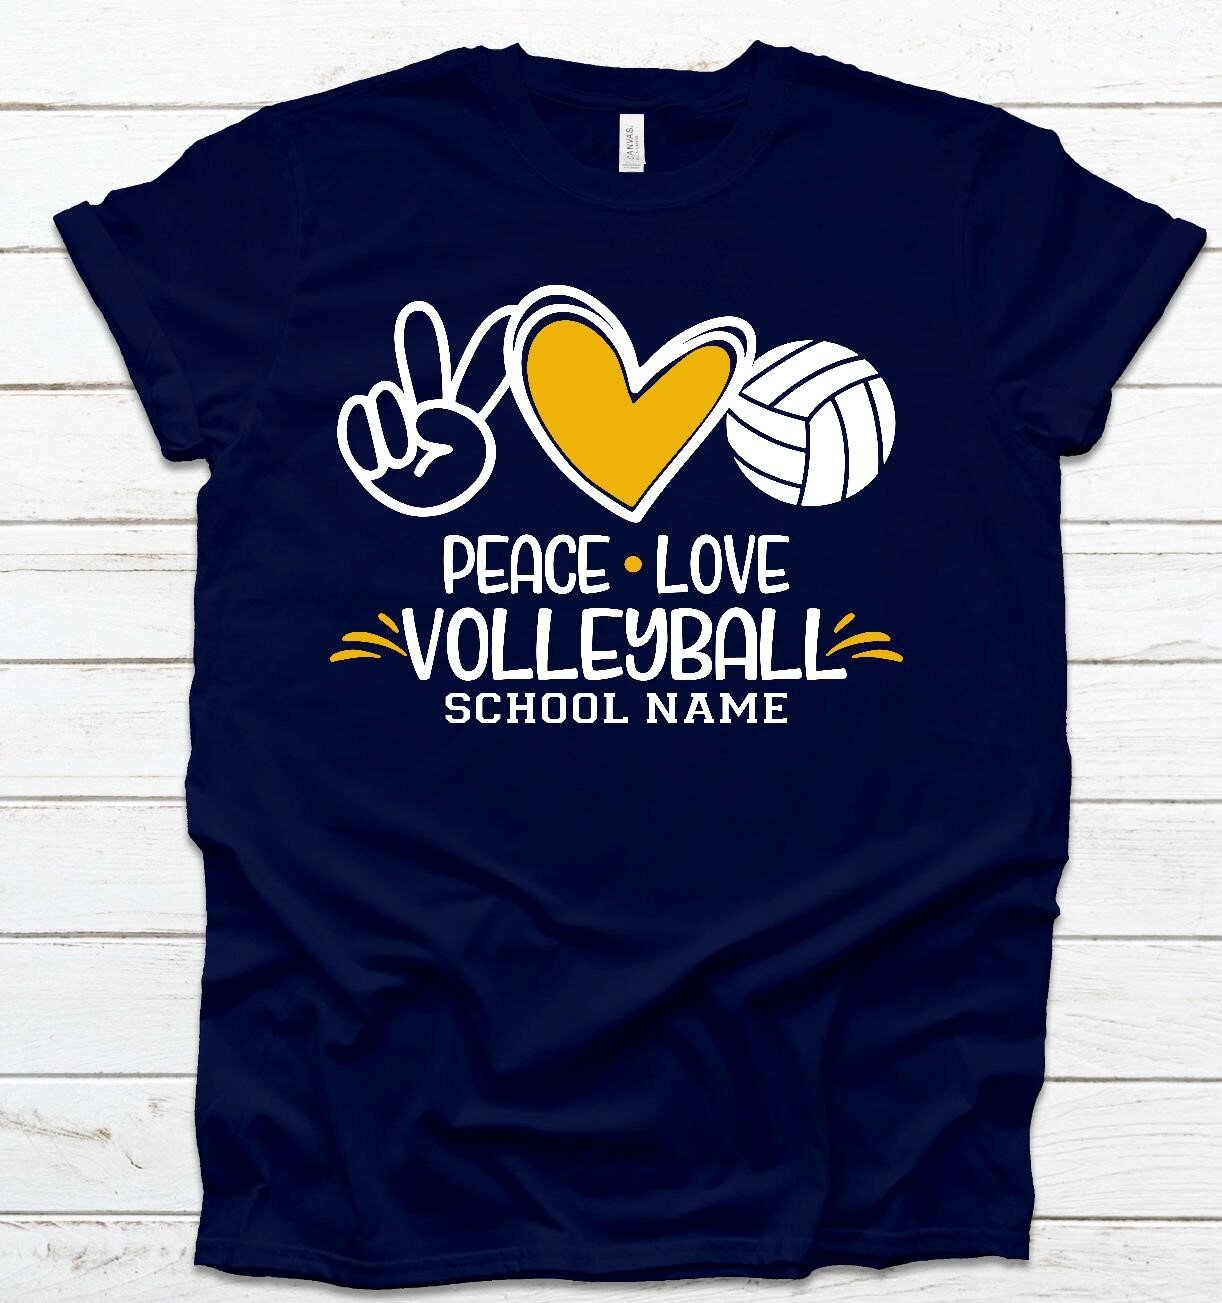 volleyball4 (2).jpg